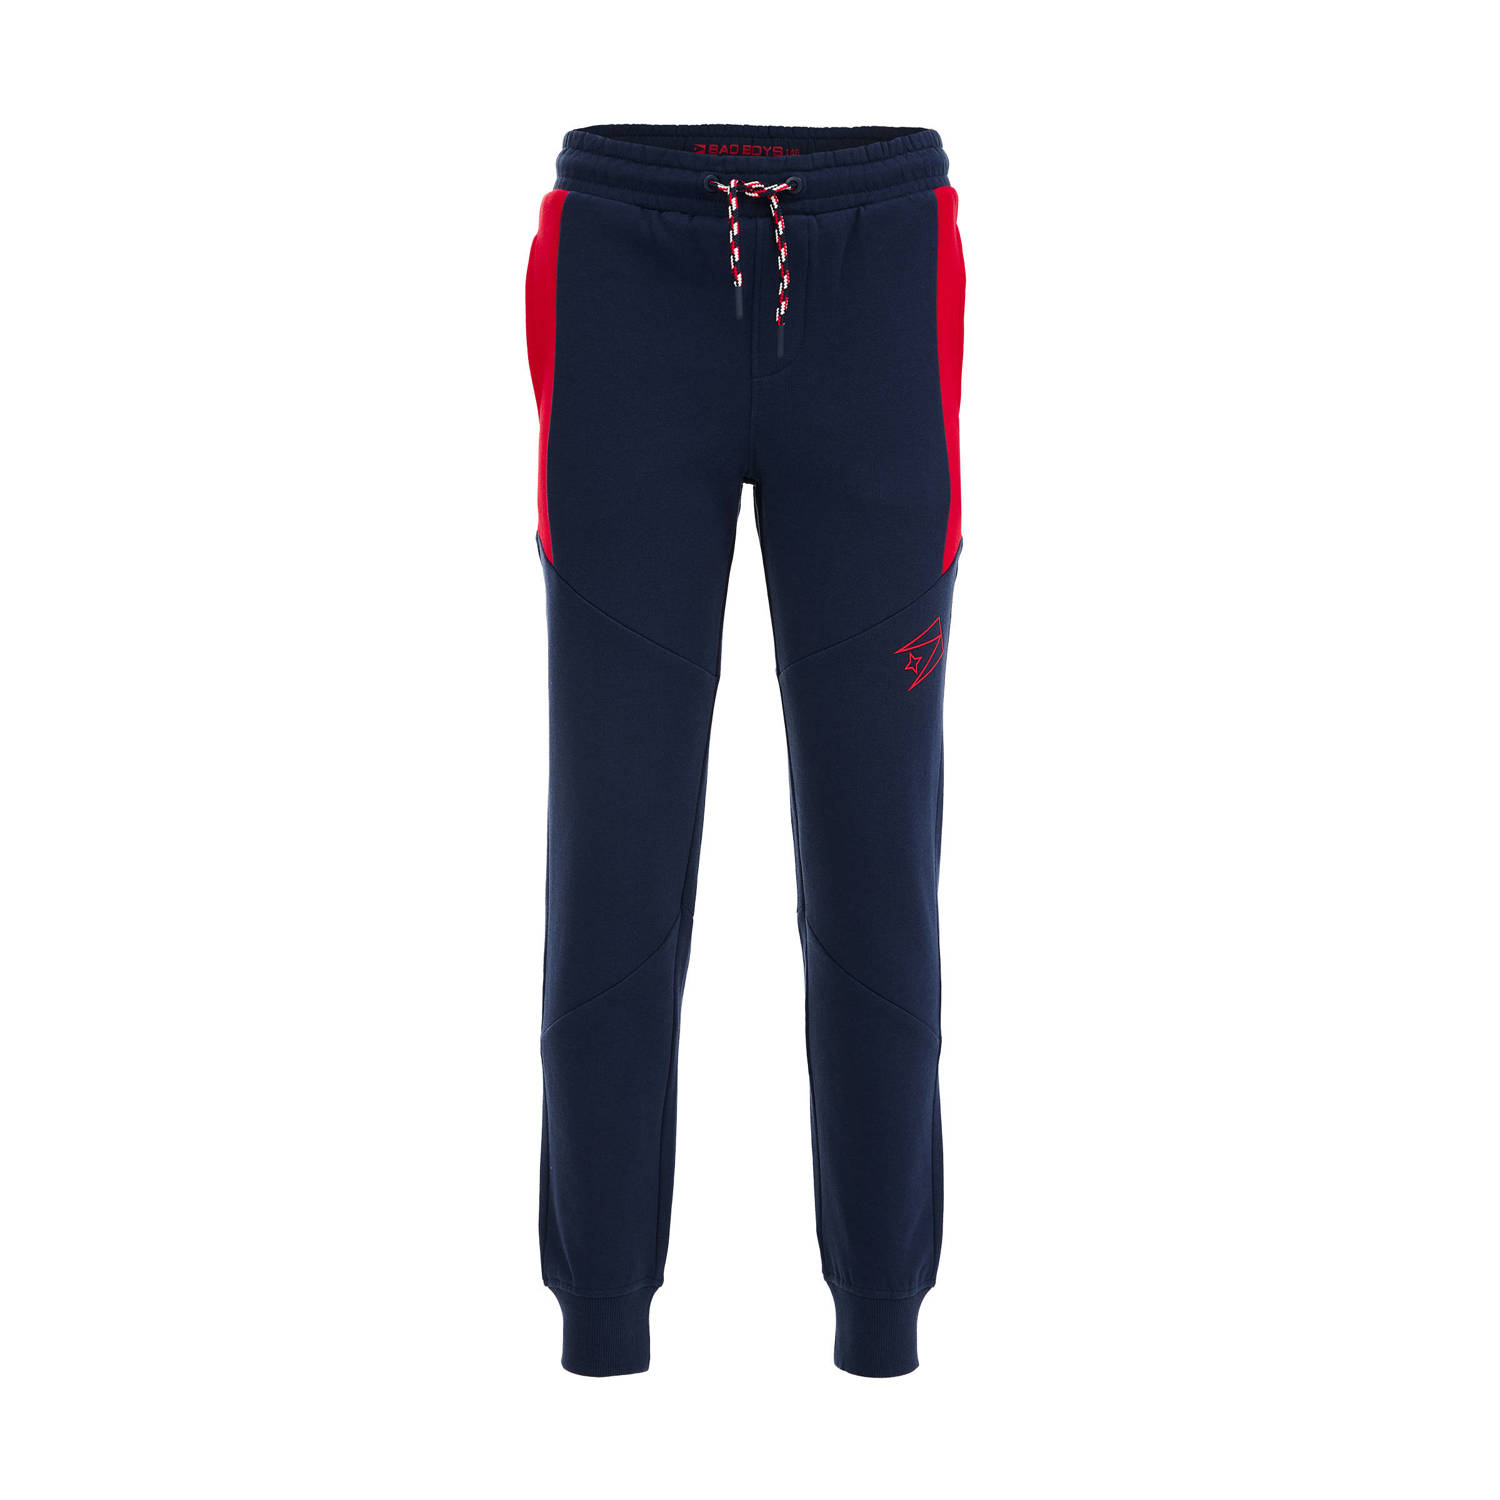 WE Fashion slim fit joggingbroek donkerblauw rood